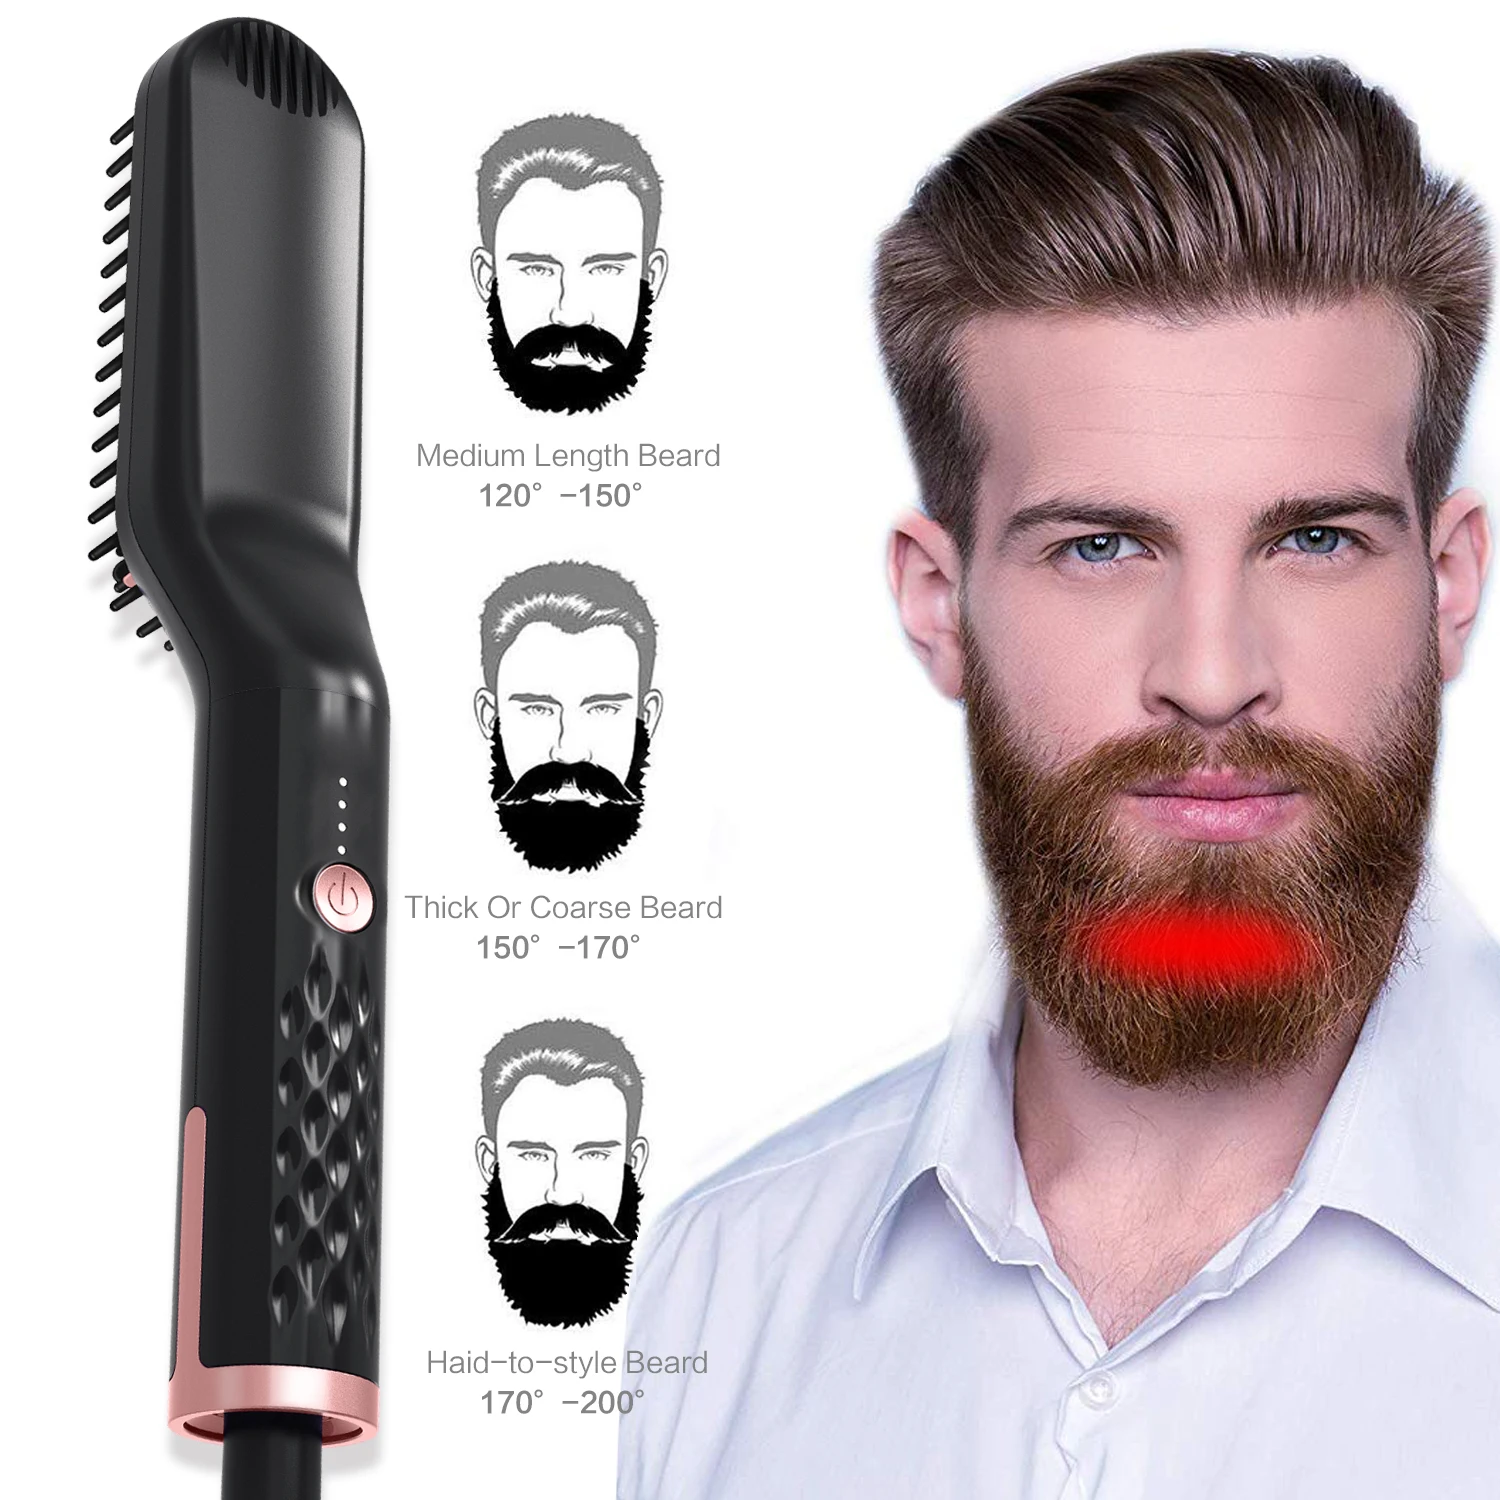 

2019 Best Selling Beard Straightener for Men Hair Comb Brush PTC Heating Ceramic Beard Straightening Comb Wholesale Dual Voltage, White